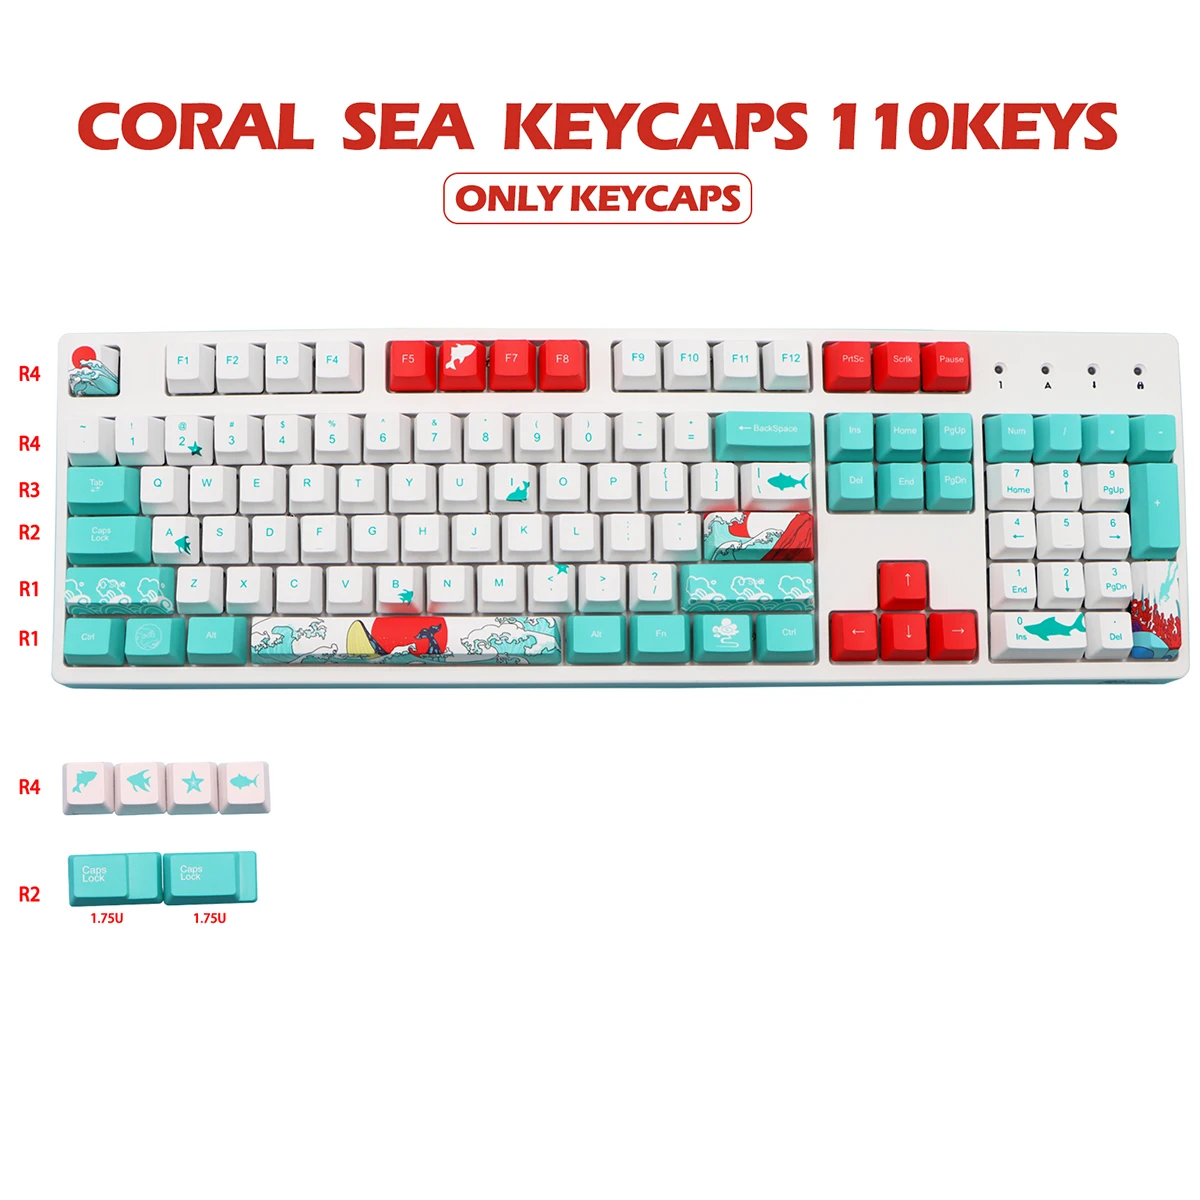 110-keys-pbt-keycaps-oem-profile-coral-sea-keycap-dz60-poker-gk61-gk64-dye-sublimation-keycap-for-gaming-keyboard